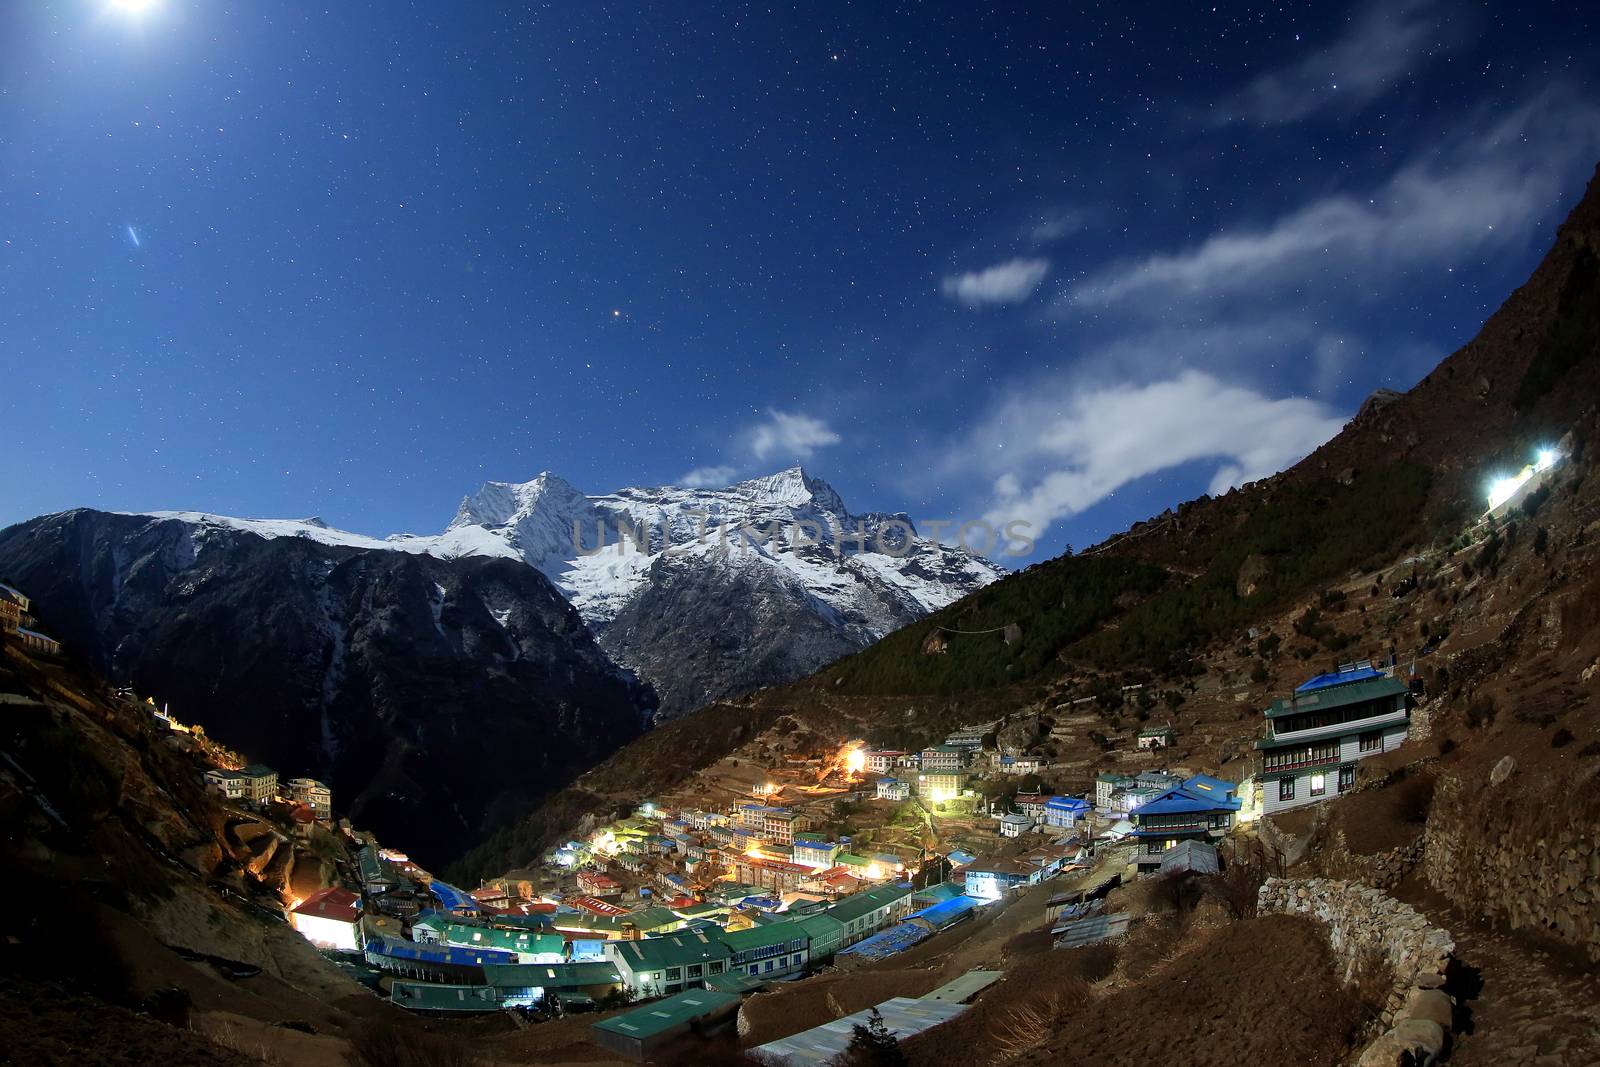 Night sky and stars passing by behind mountain Kongde Ri, Namche Bazaar village. Nepal.
